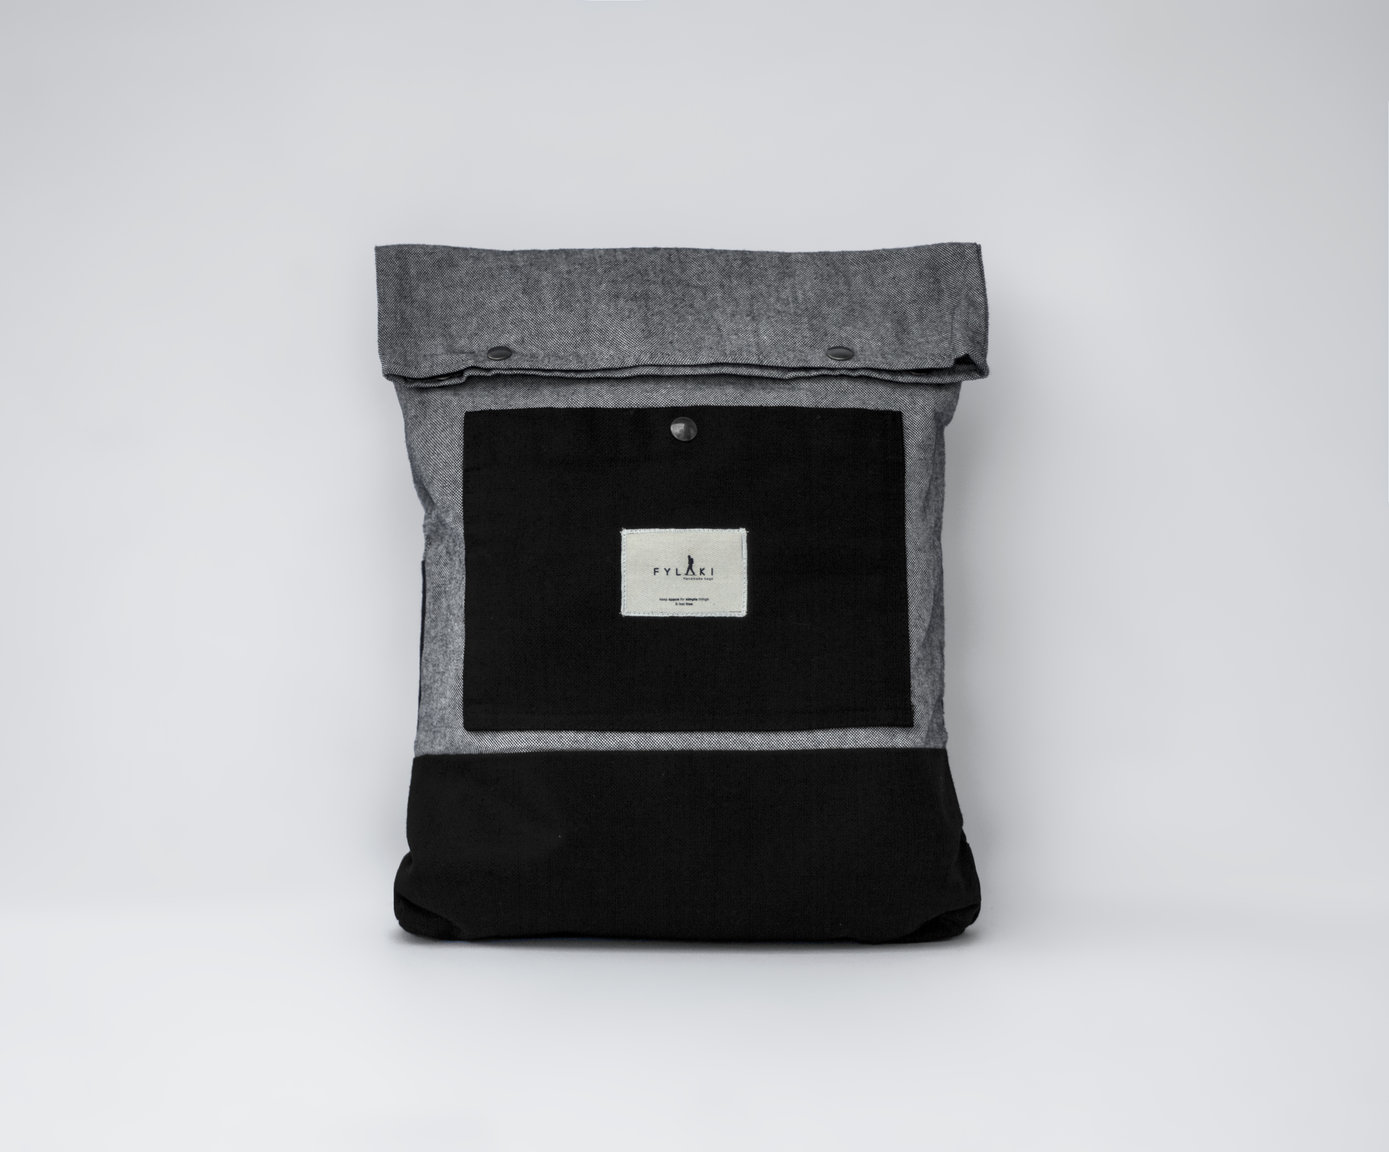 Black & gray backpack